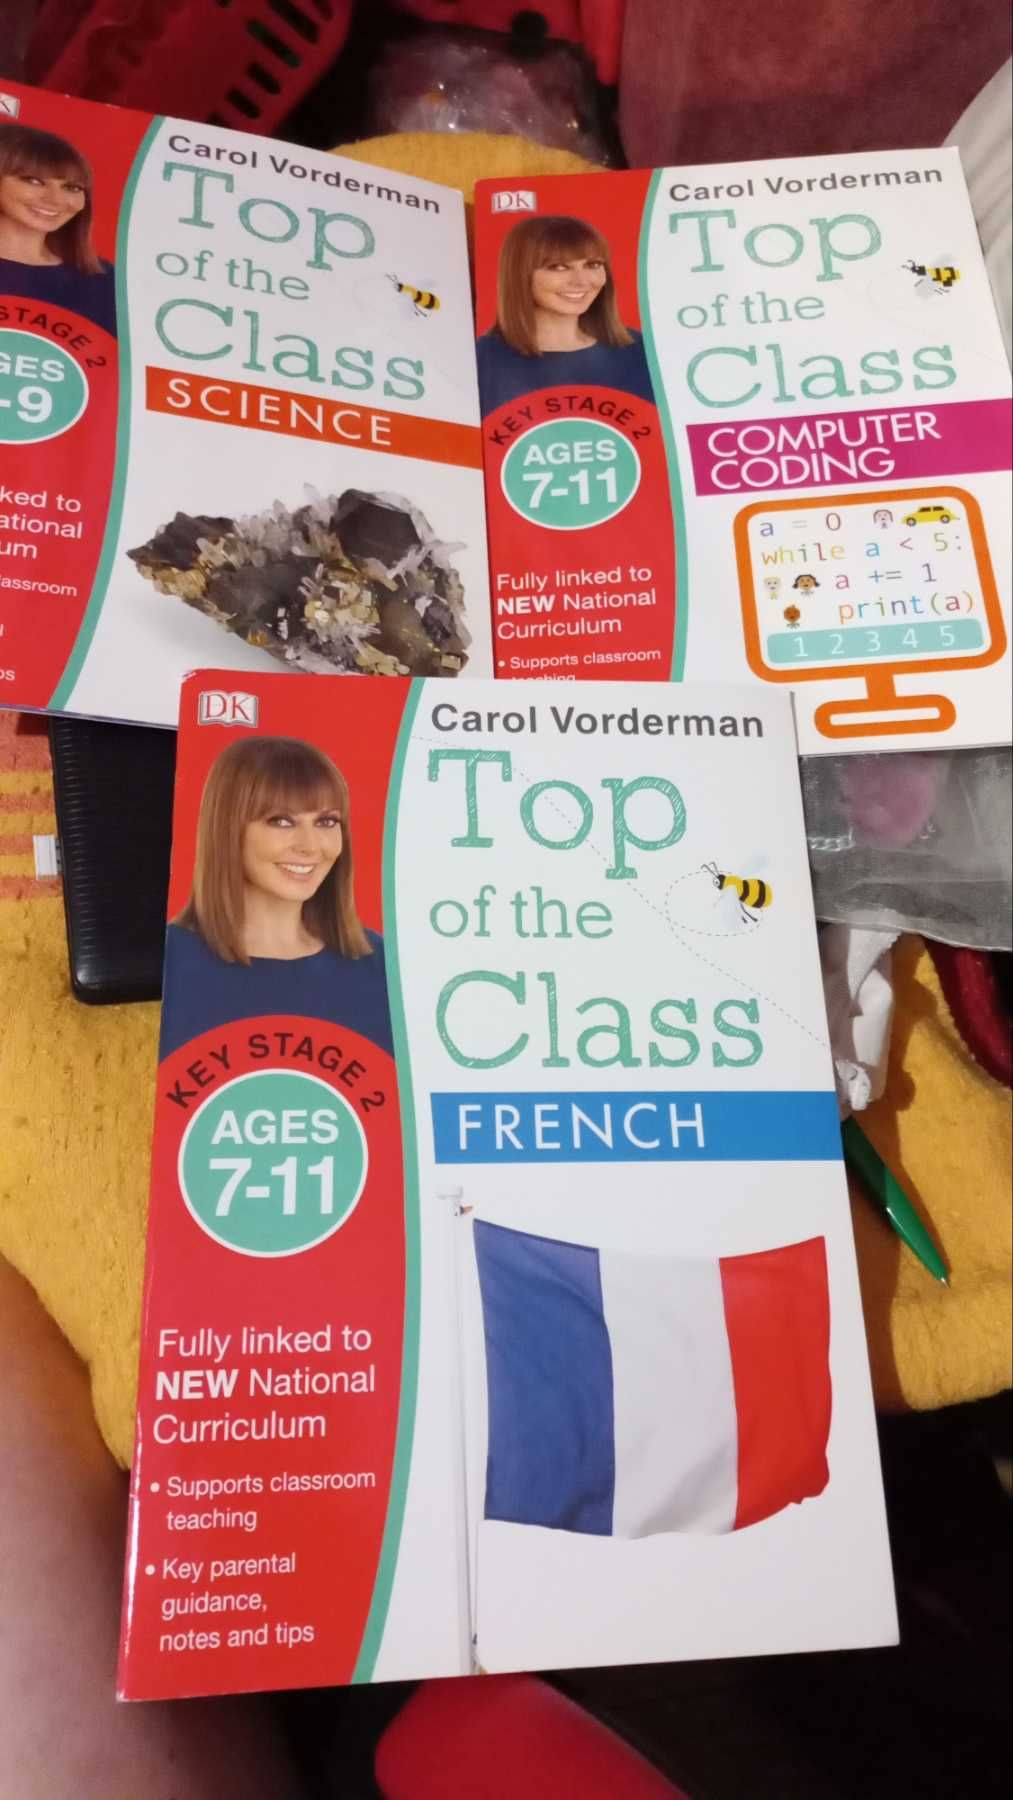 учебник carol vorderman top of the class science french computer